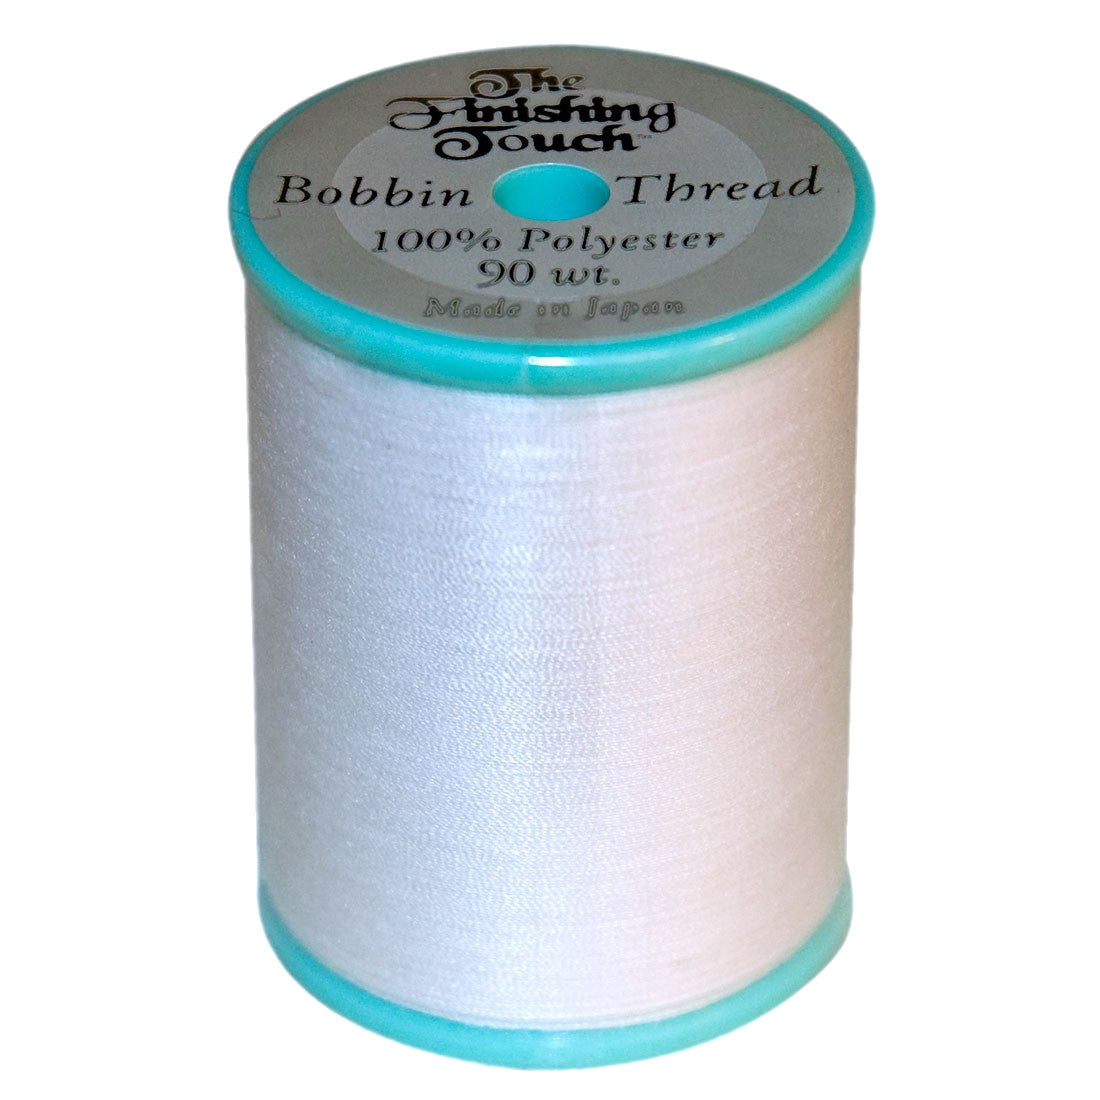 Embroidery Bobbin Thread (90wt), Babylock #BBTE-W image # 41323